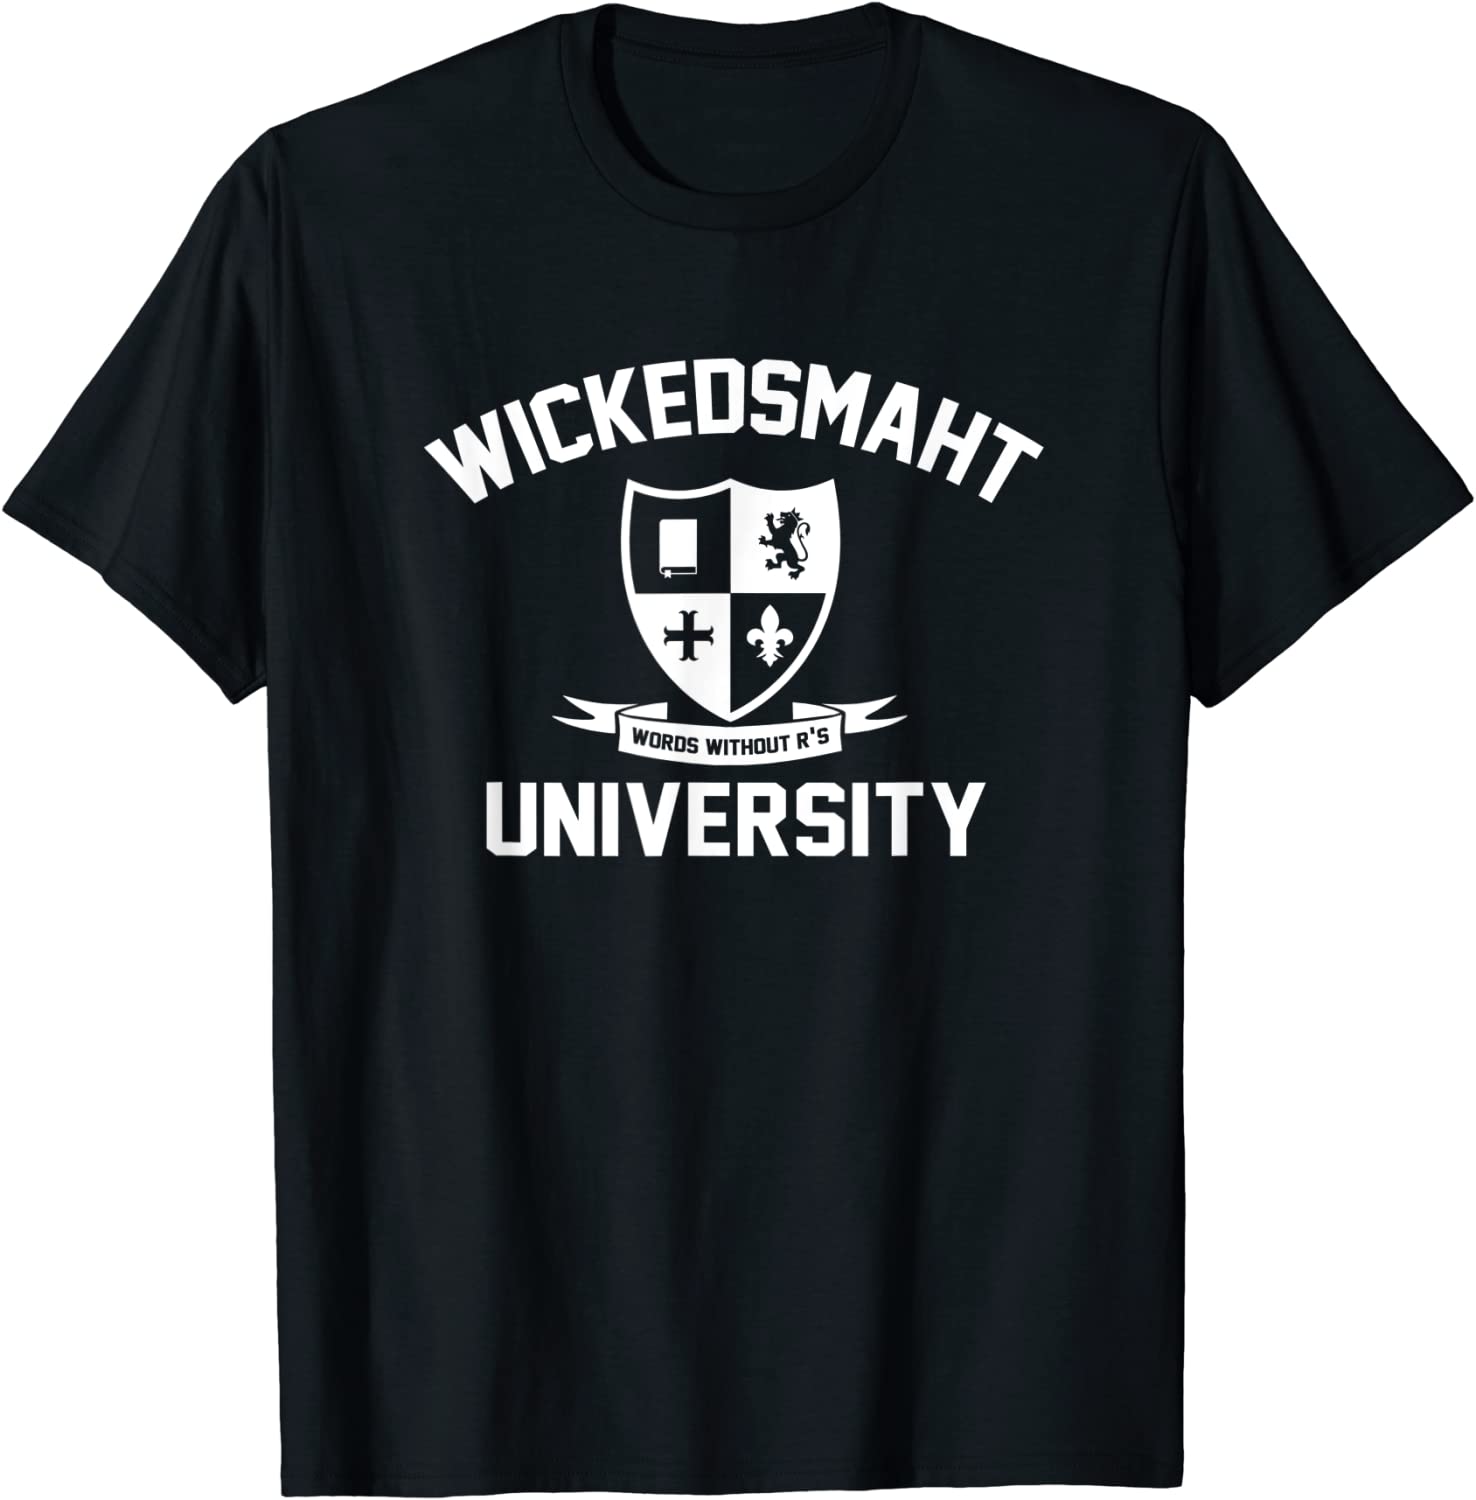 wickedsmaht university t-shirt